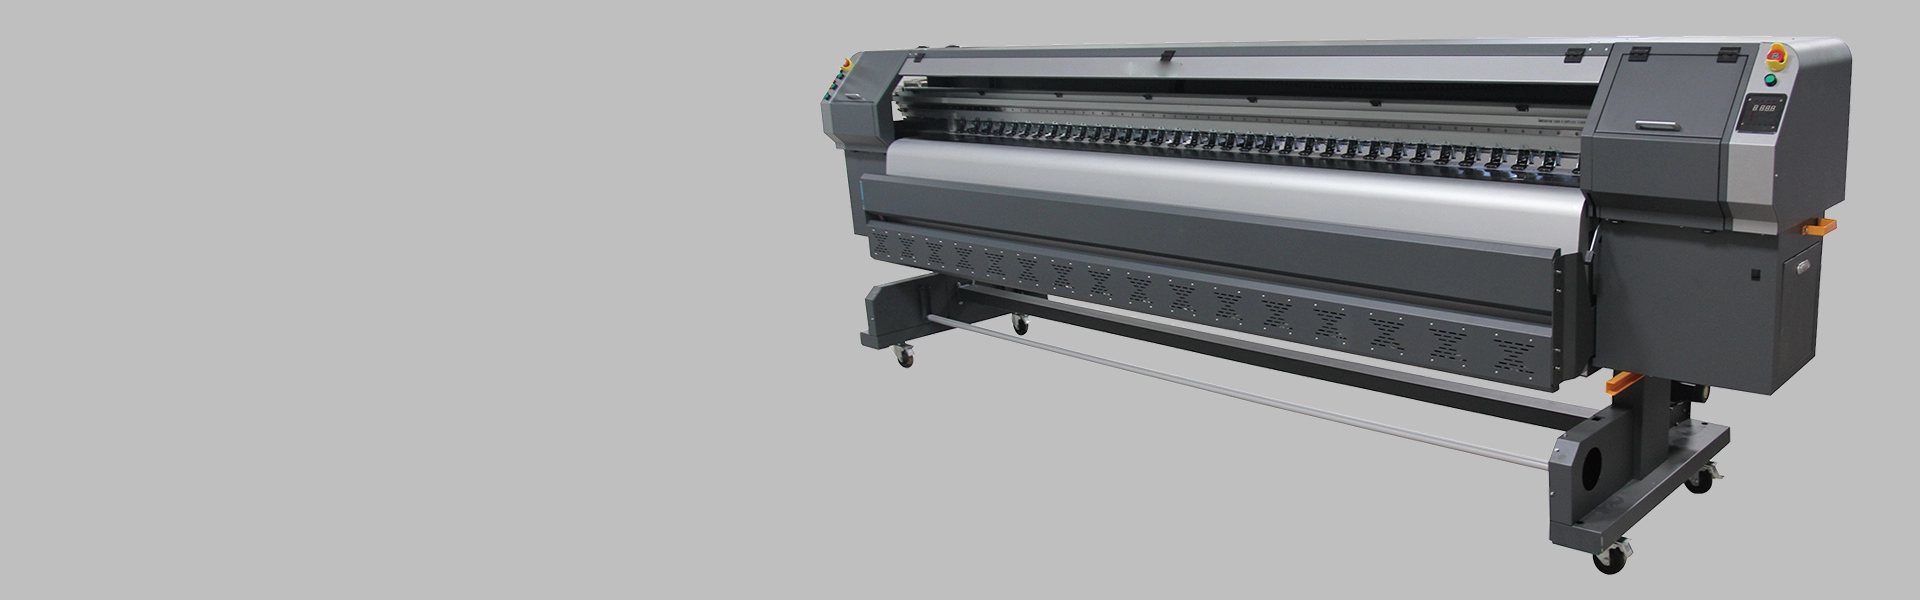 Konica 512i Solvent Printer CK8